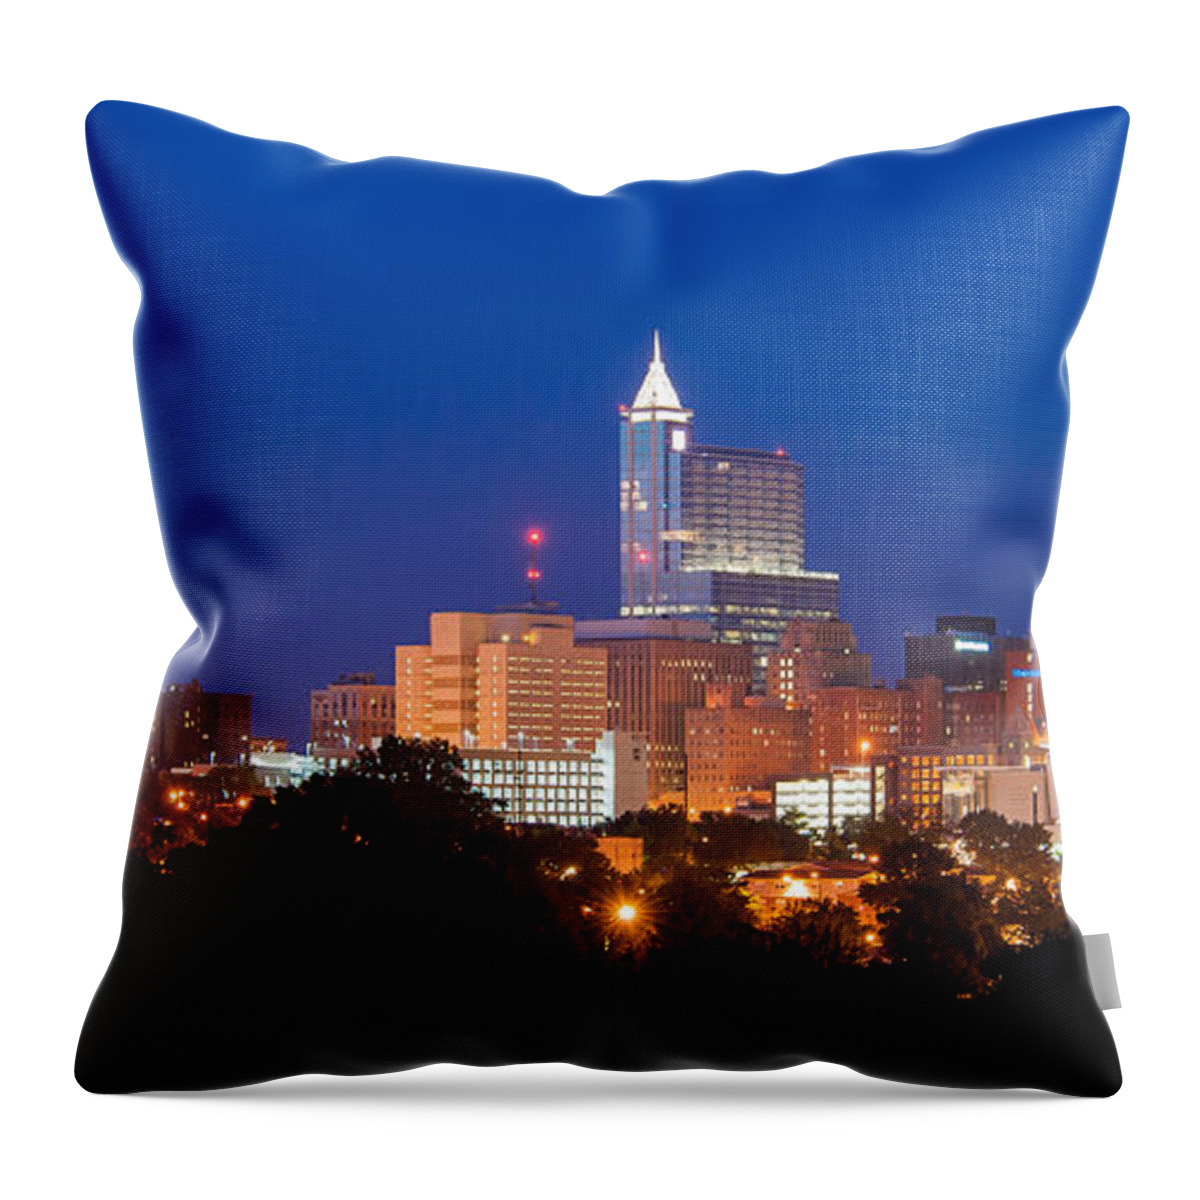 Joye Ardyn Durham Throw Pillow featuring the photograph Raleigh Skyline by Joye Ardyn Durham